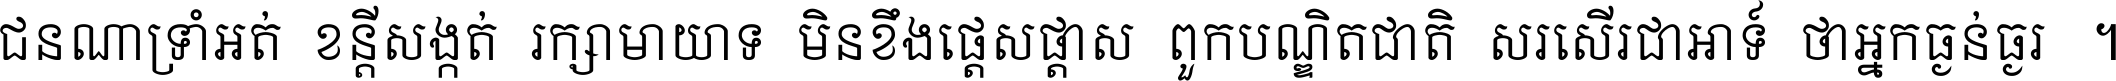 Khmer Mondulkiri